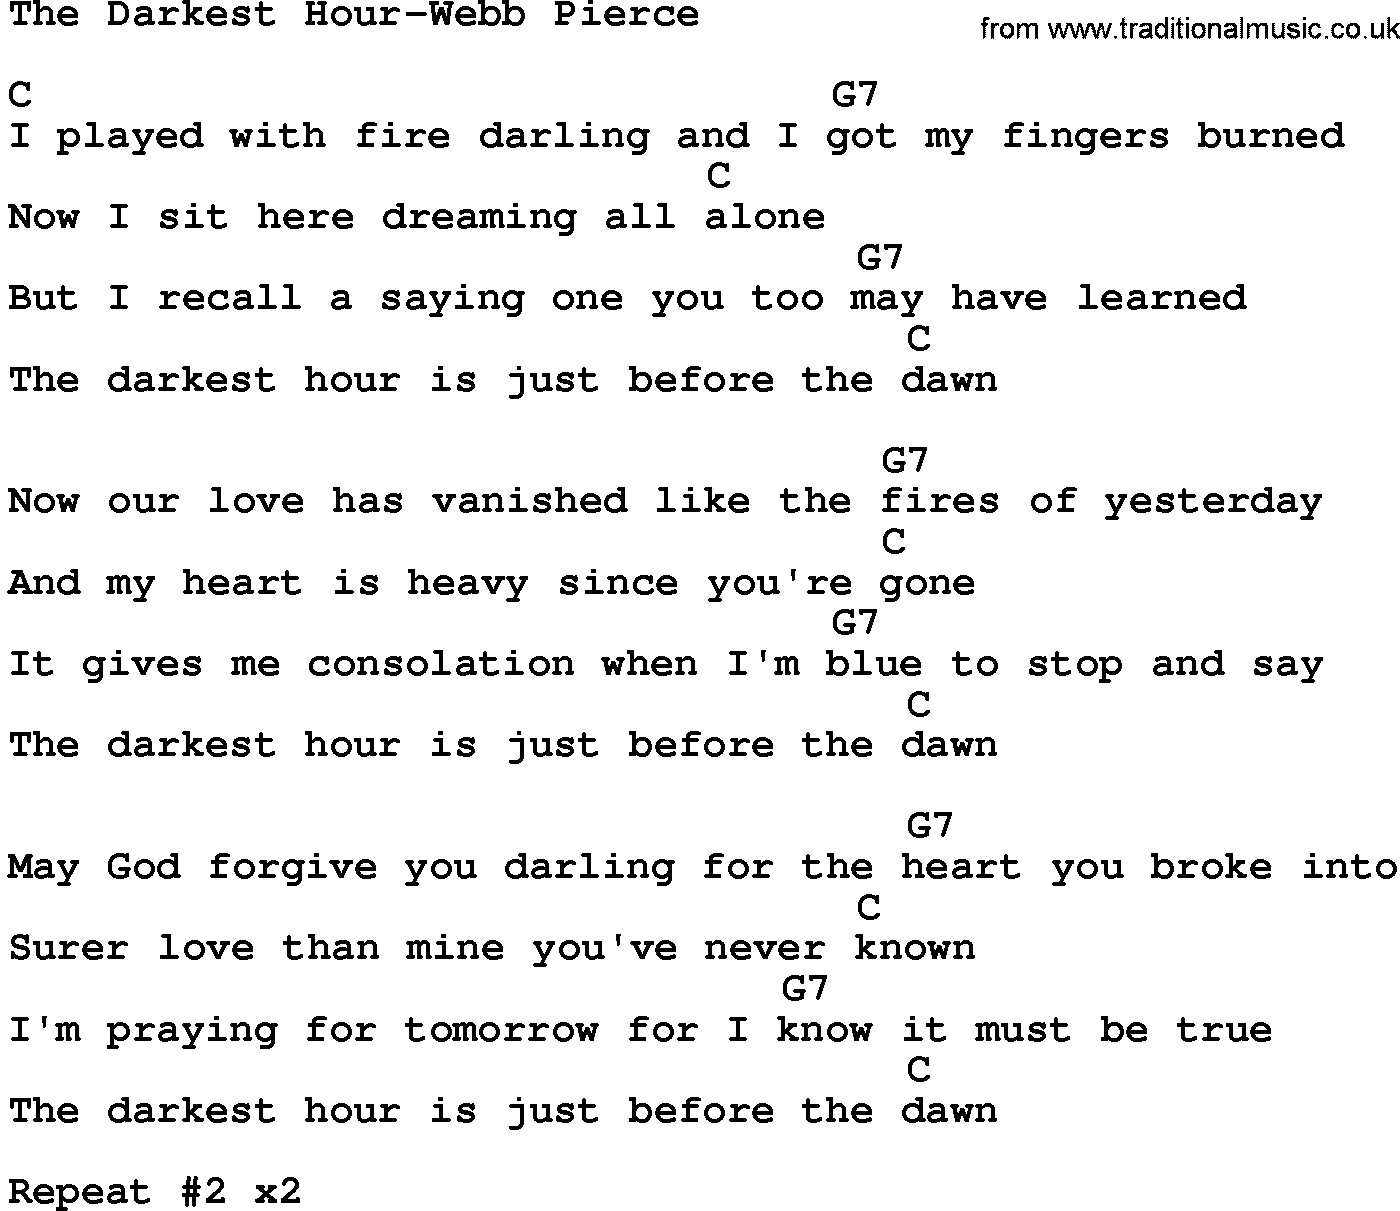 Country music song: The Darkest Hour-Webb Pierce lyrics and chords